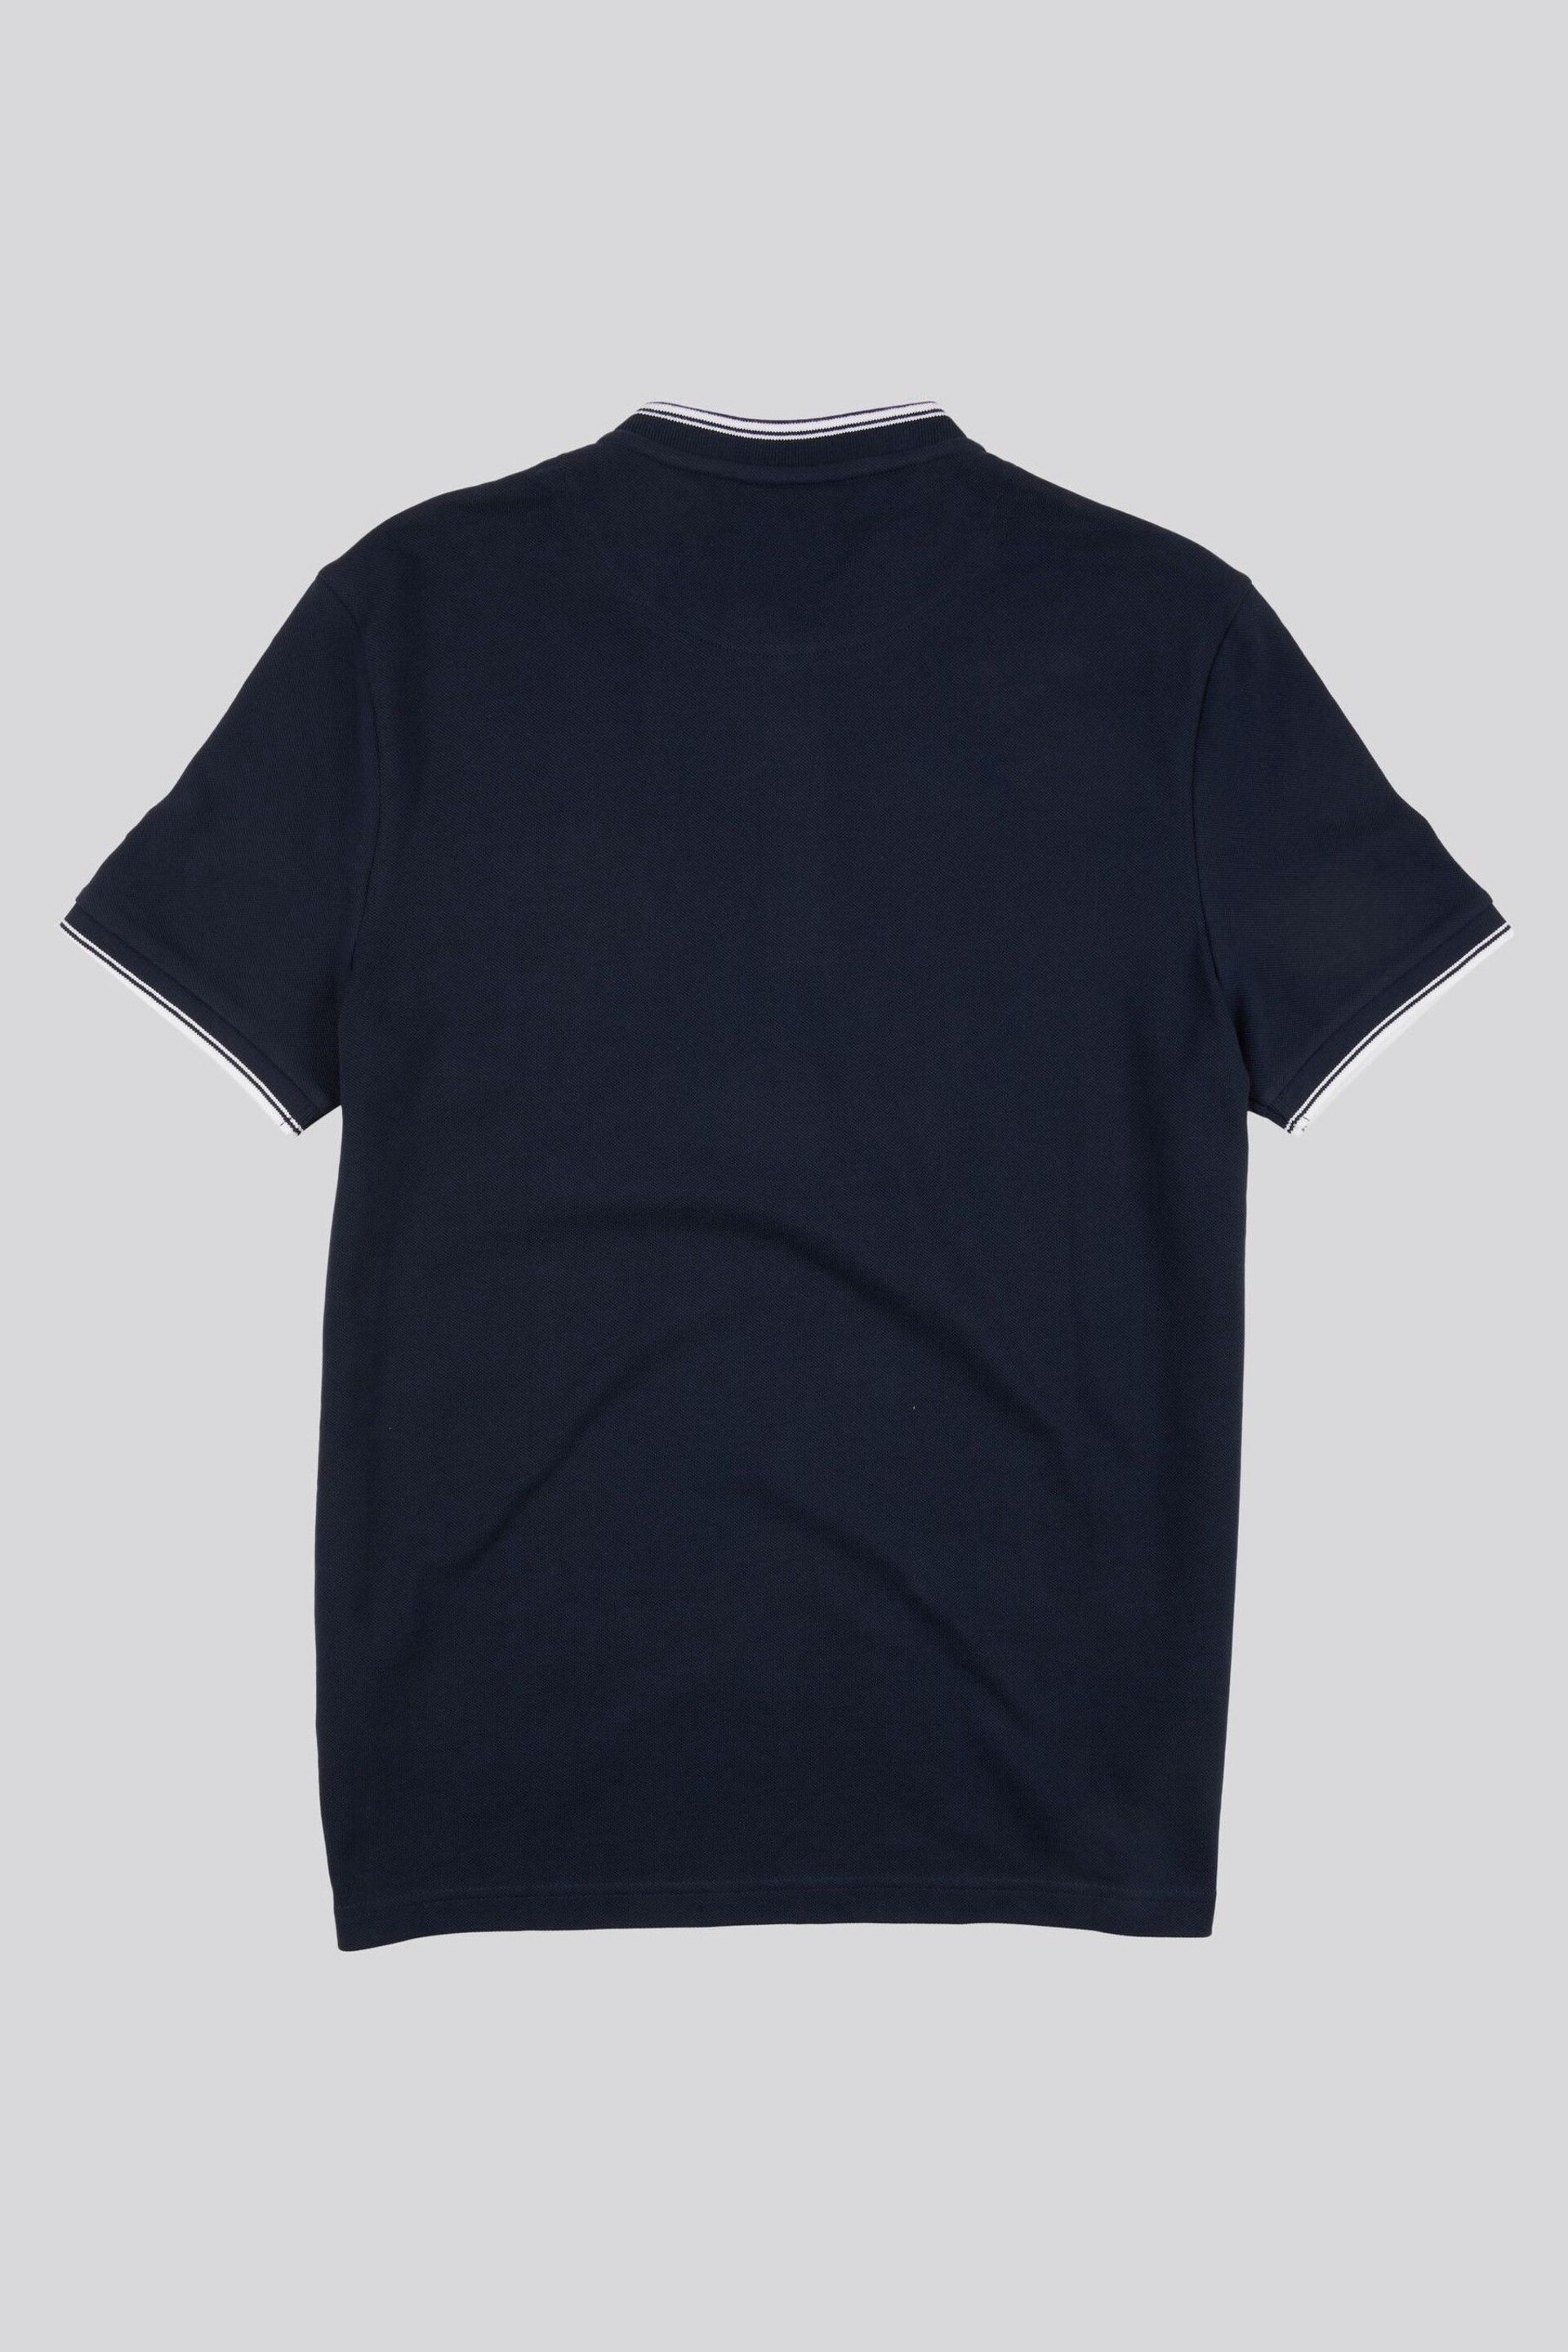 U.S. Polo Assn. Mens Regular Fit Blue Baseball Polo Shirt - Image 6 of 6